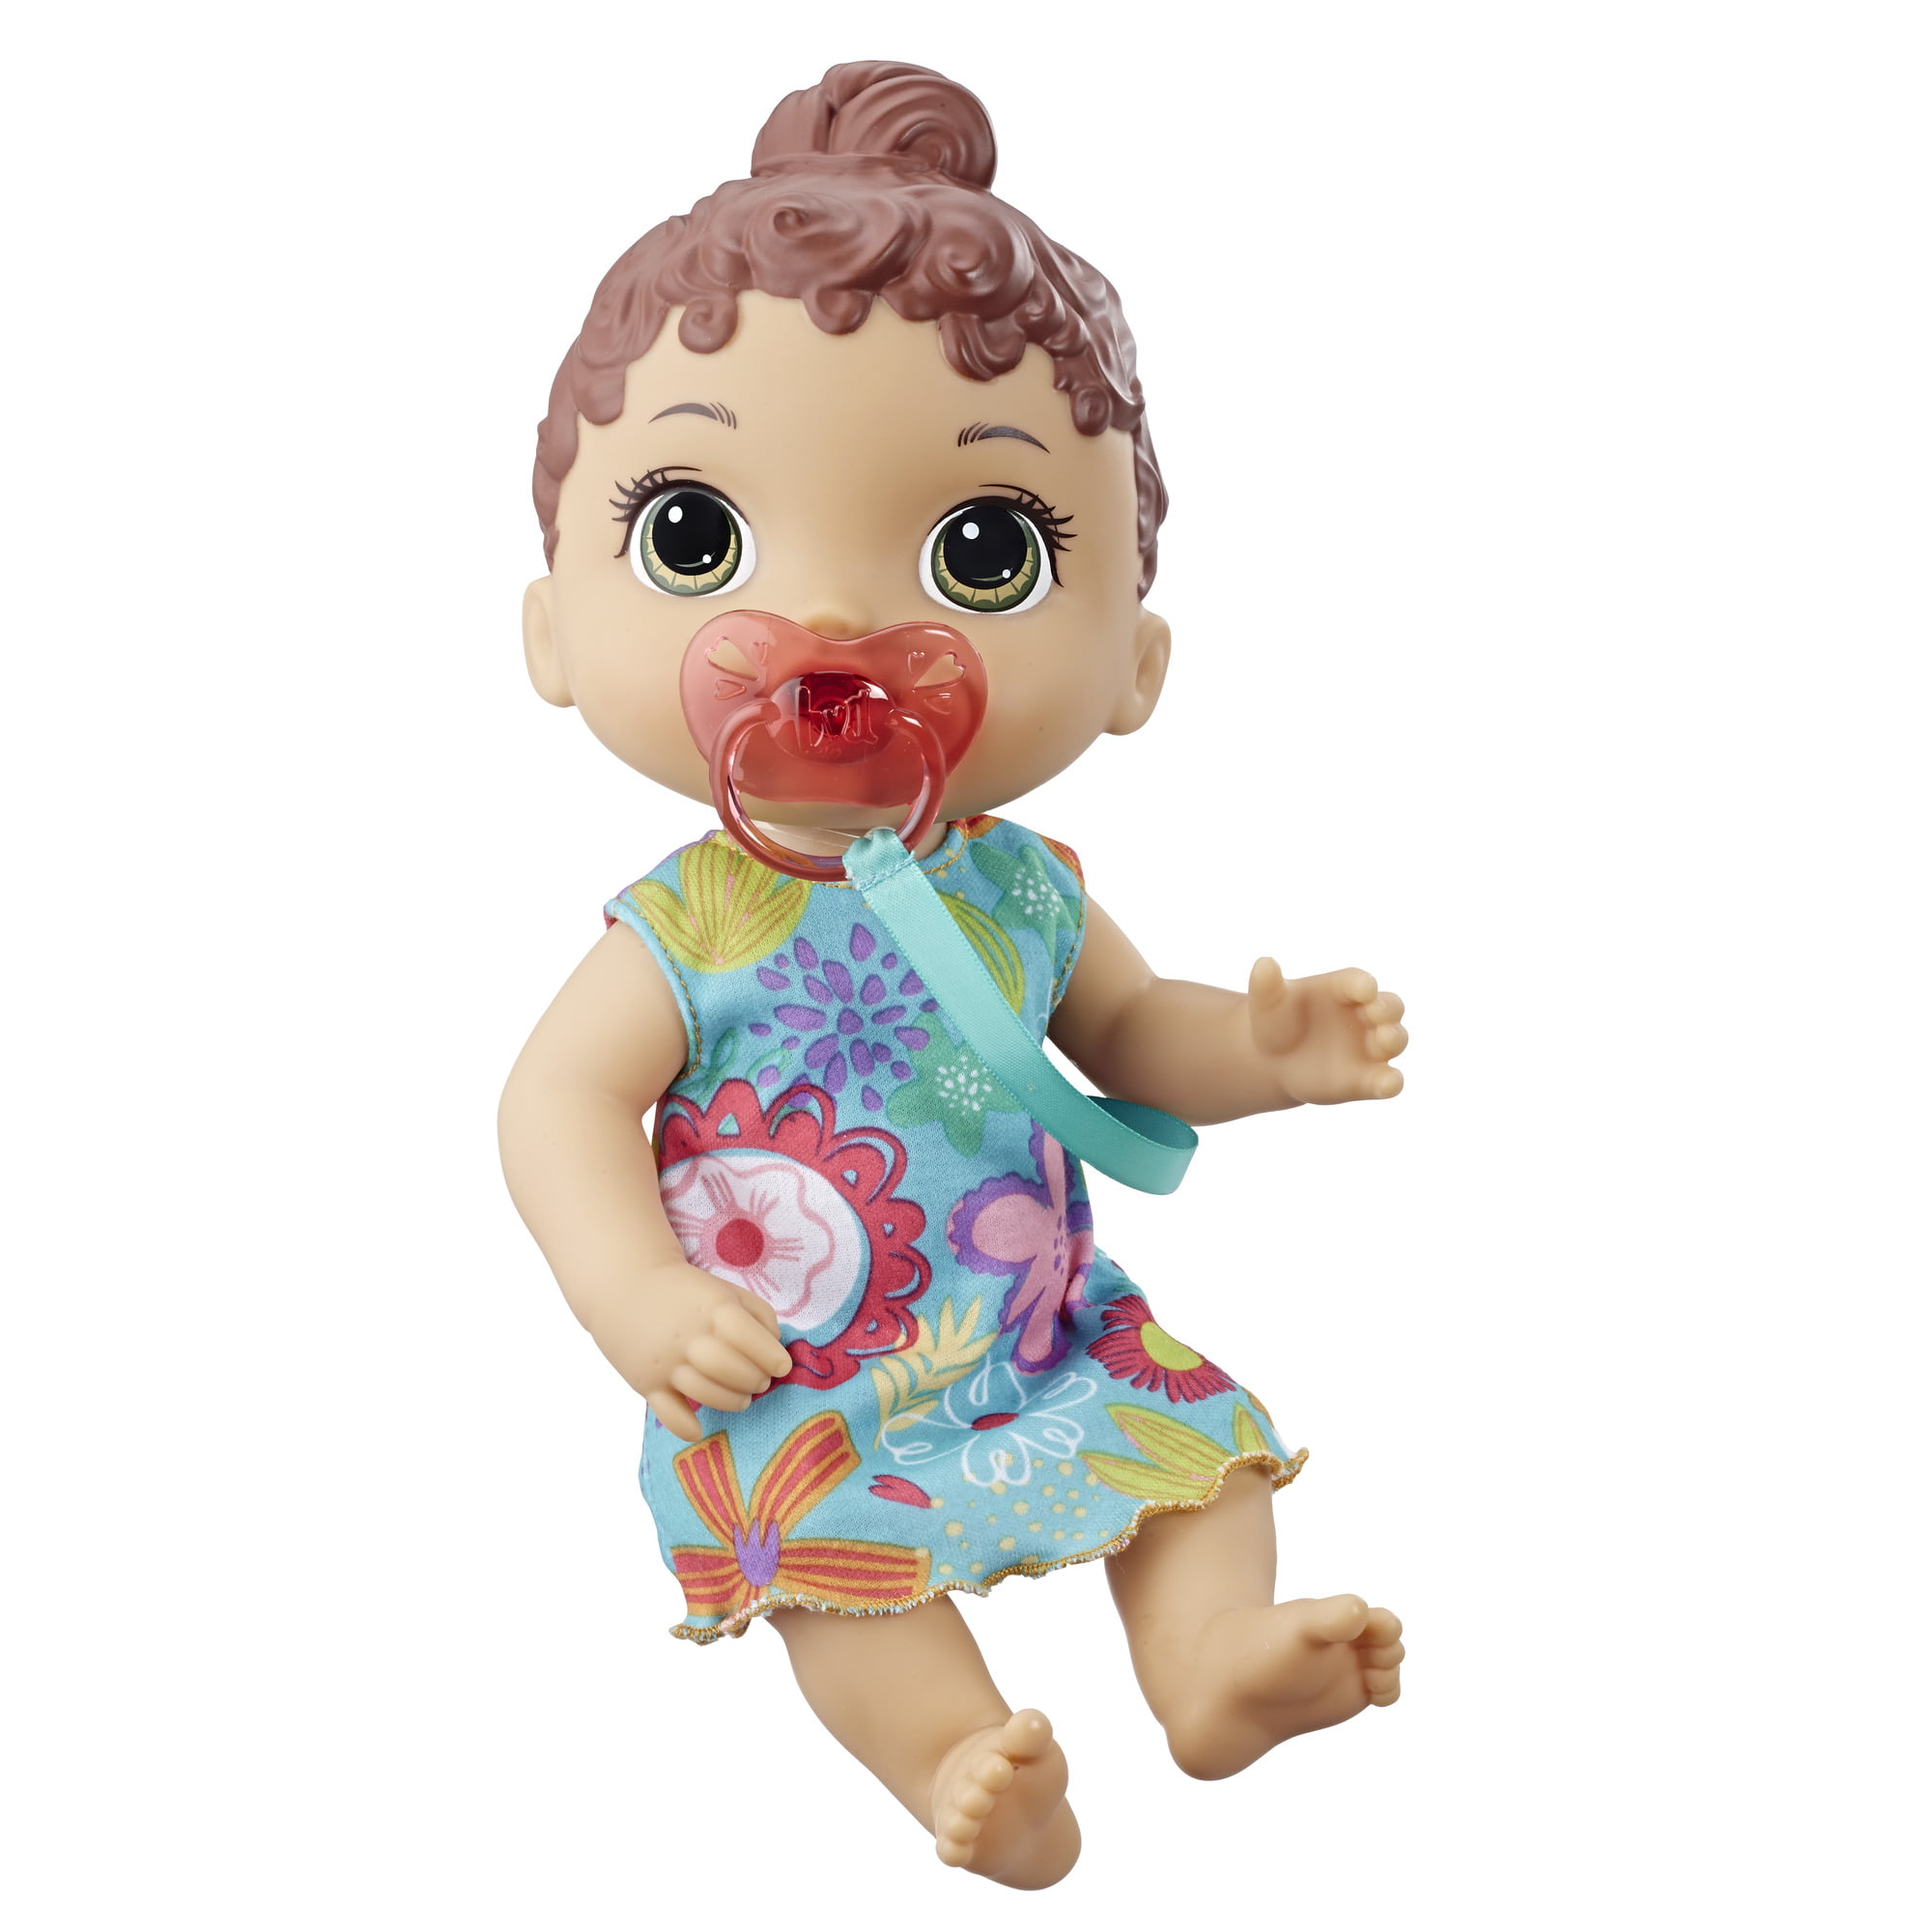 Buy > walmart baby doll dress > in stock